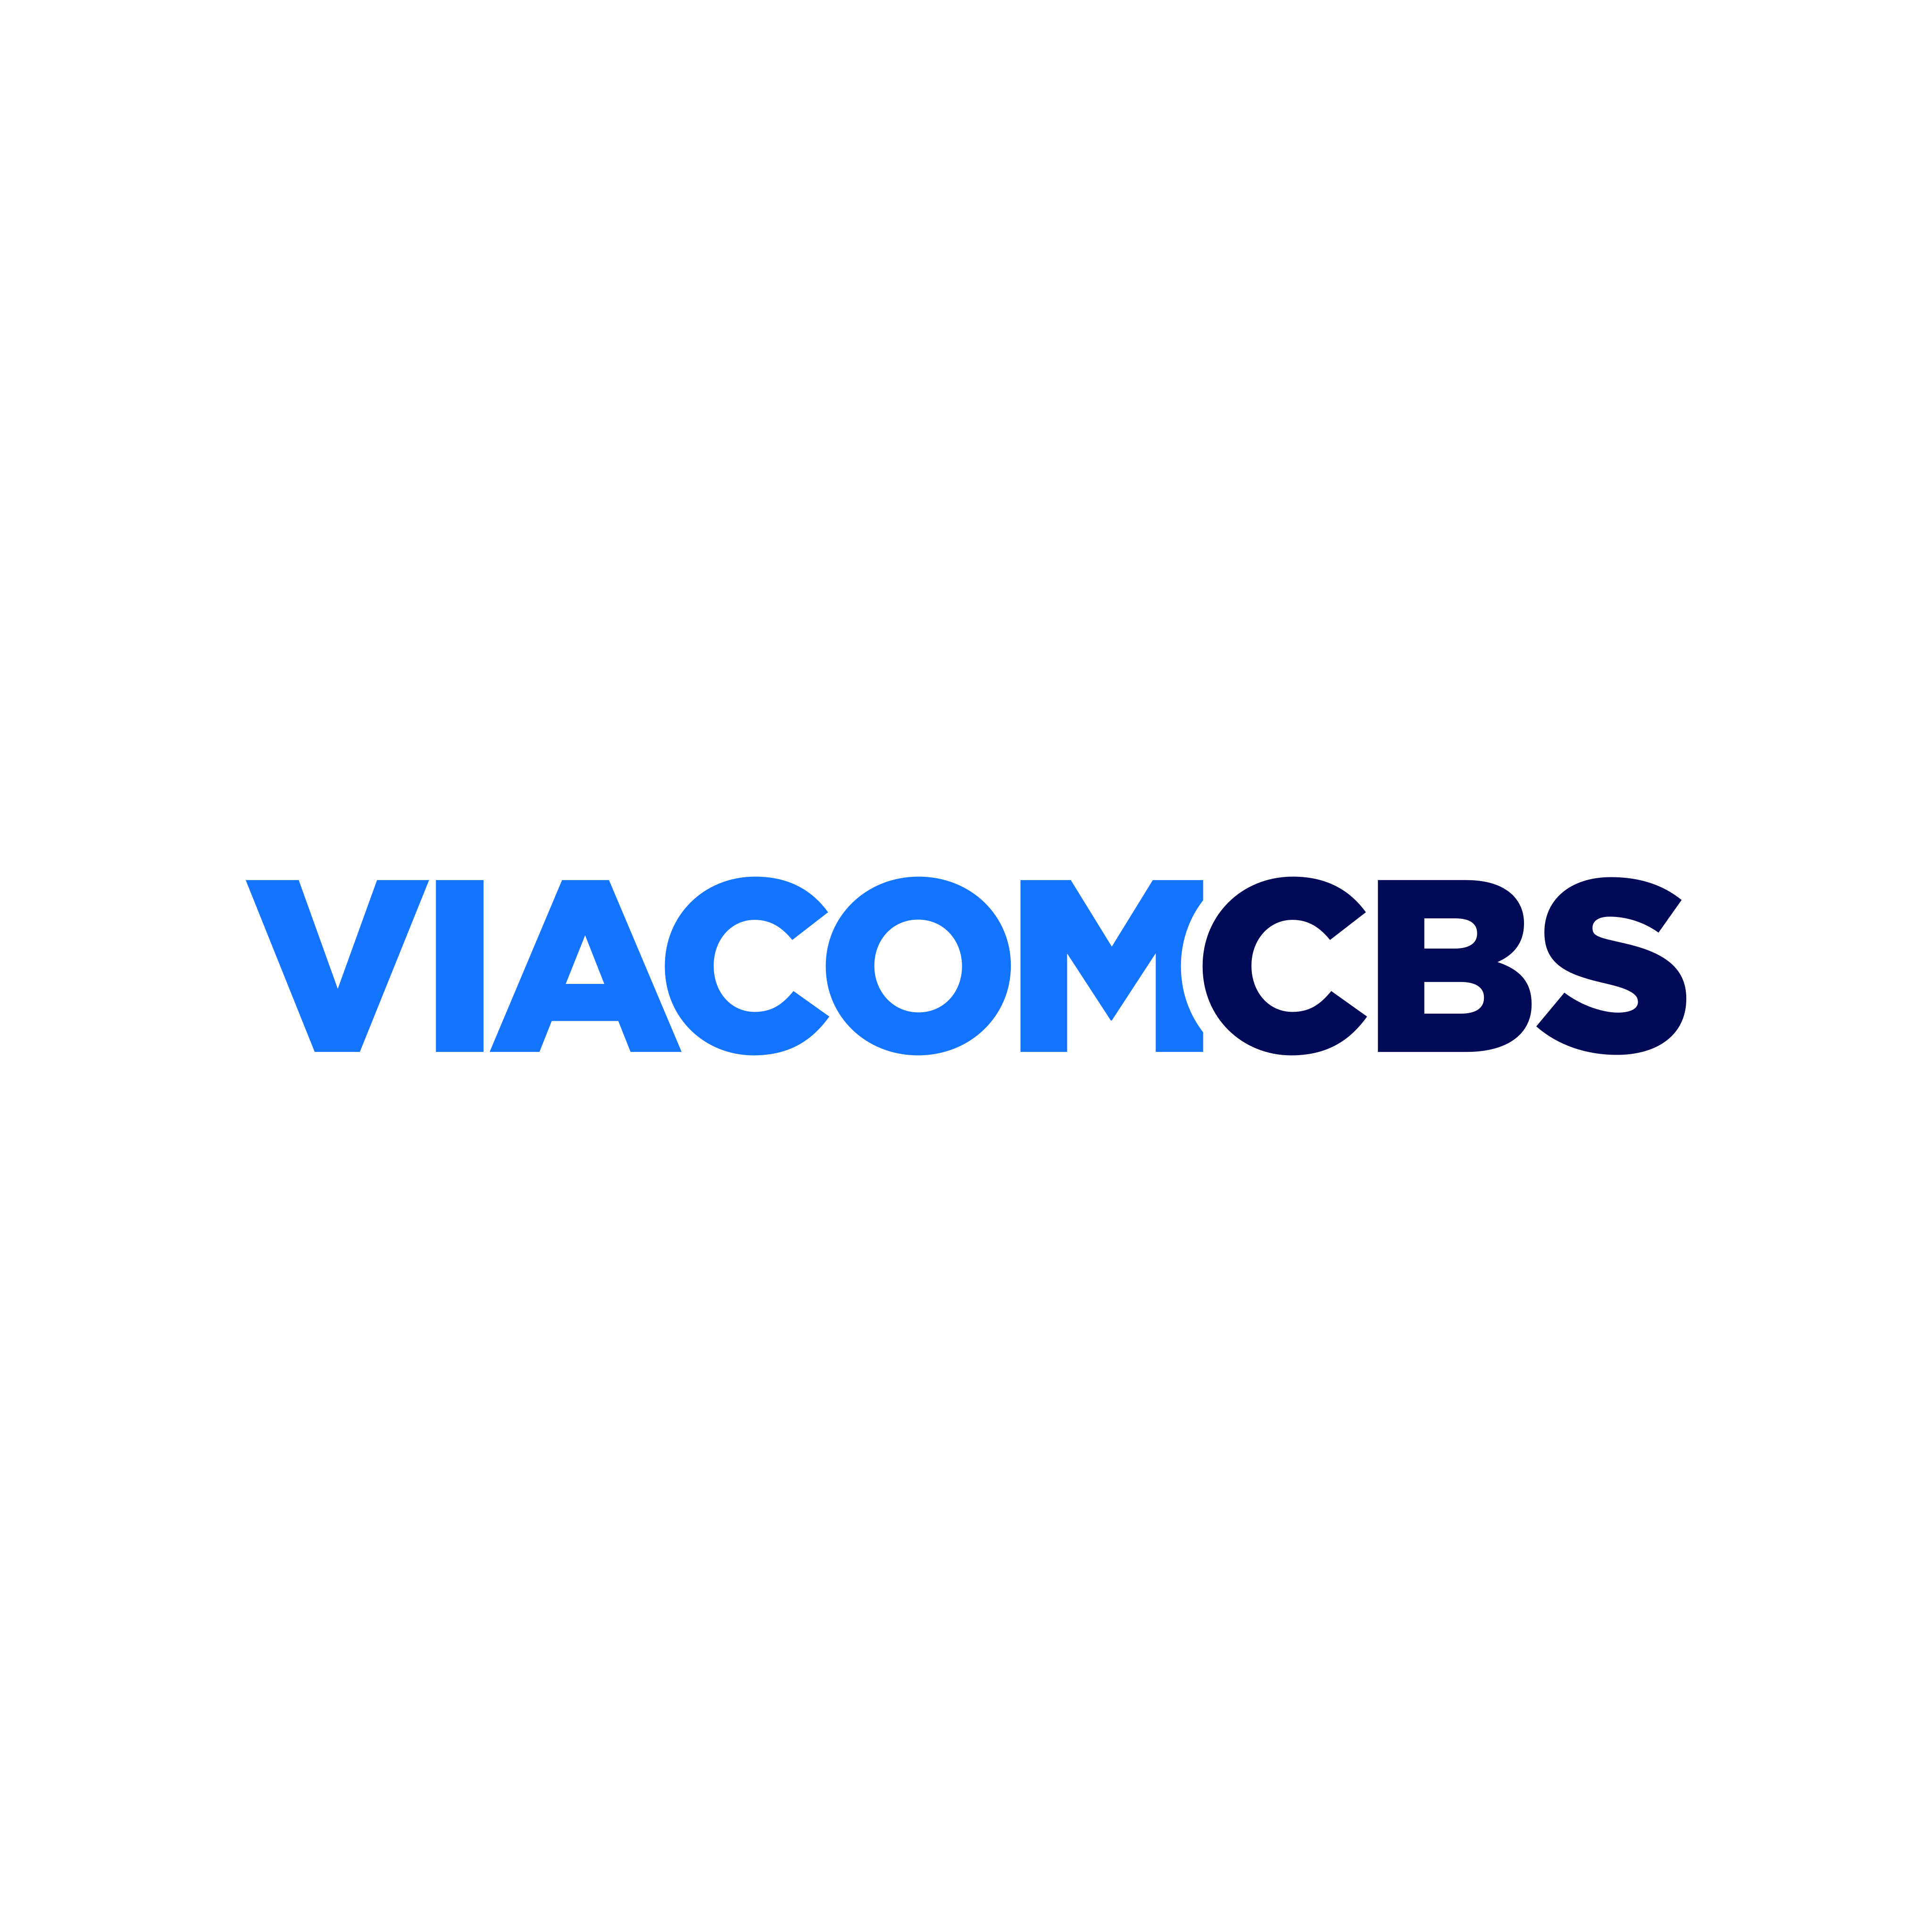 viacomcbs logo 0 - ViacomCBS Logo